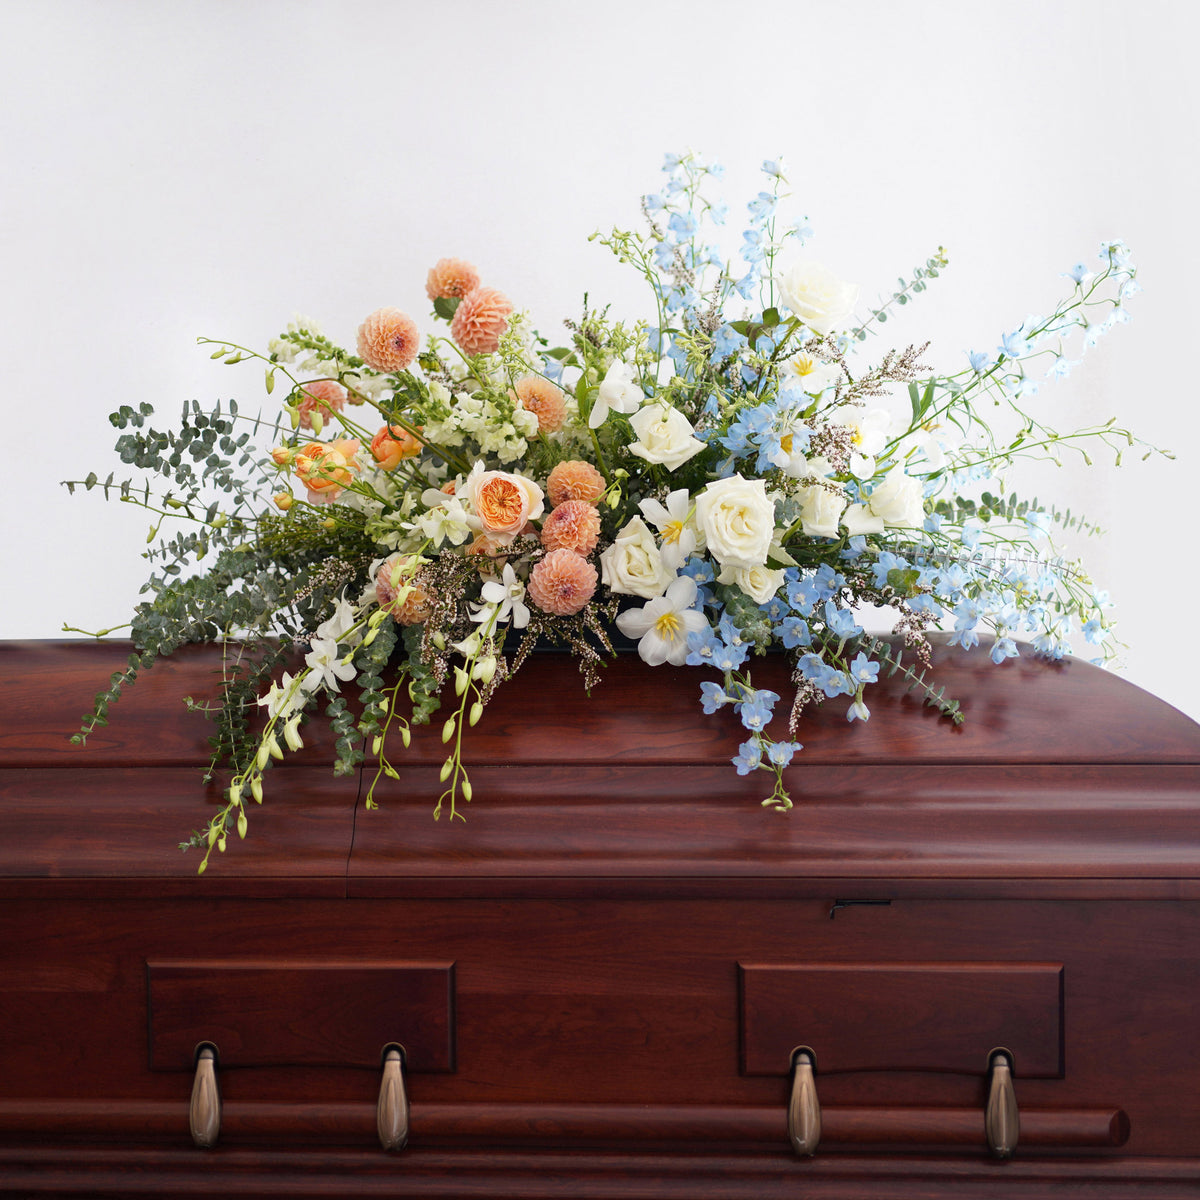 closed funeral casket